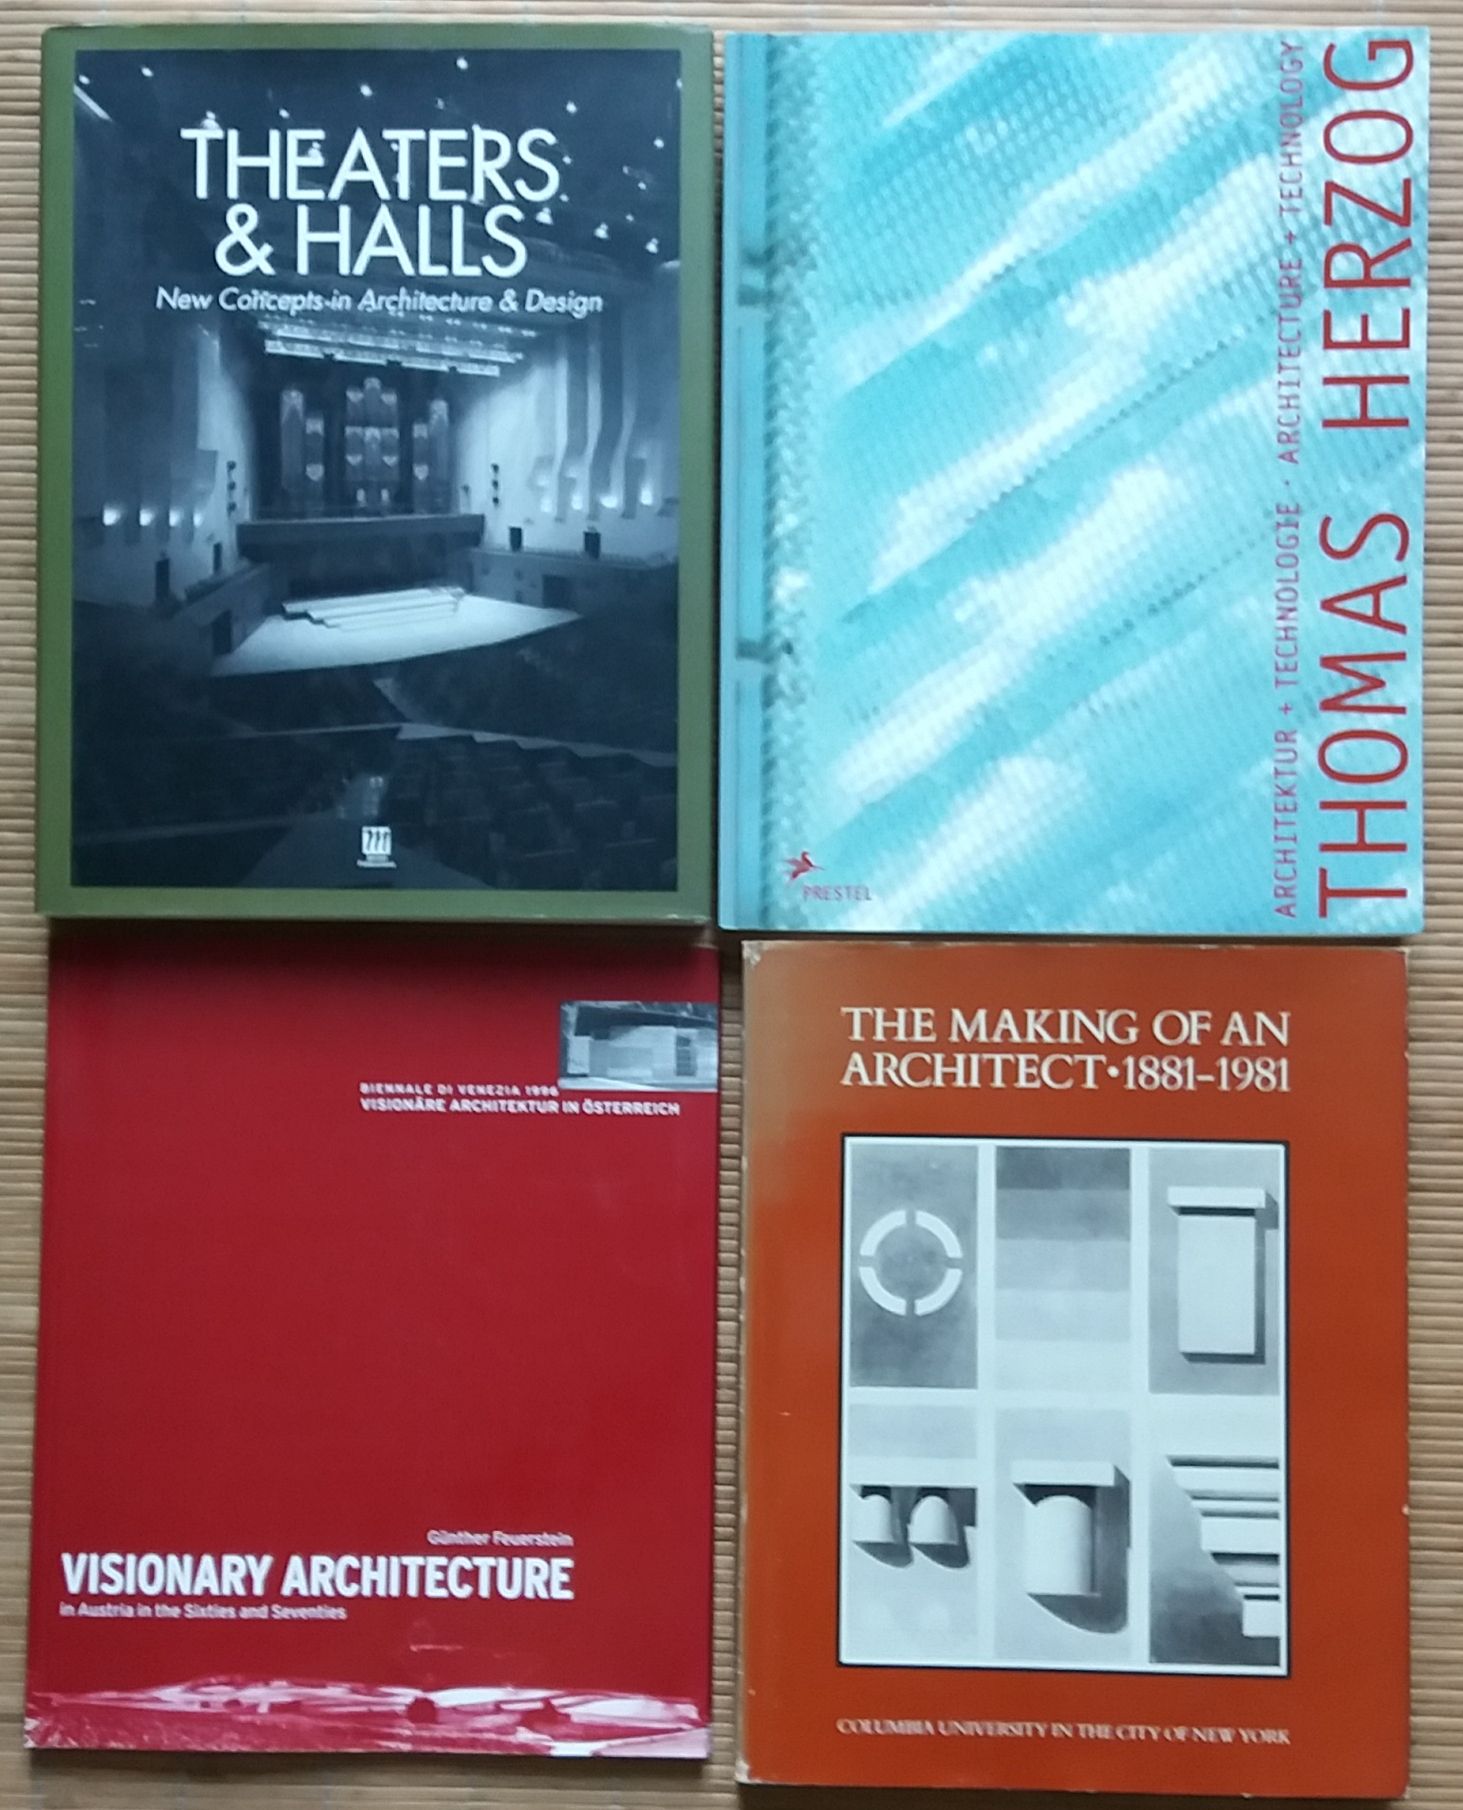 Null [ARCHITECTURE]
Lot de 10 volumes, en anglais.

*Single-Family Housing. The &hellip;